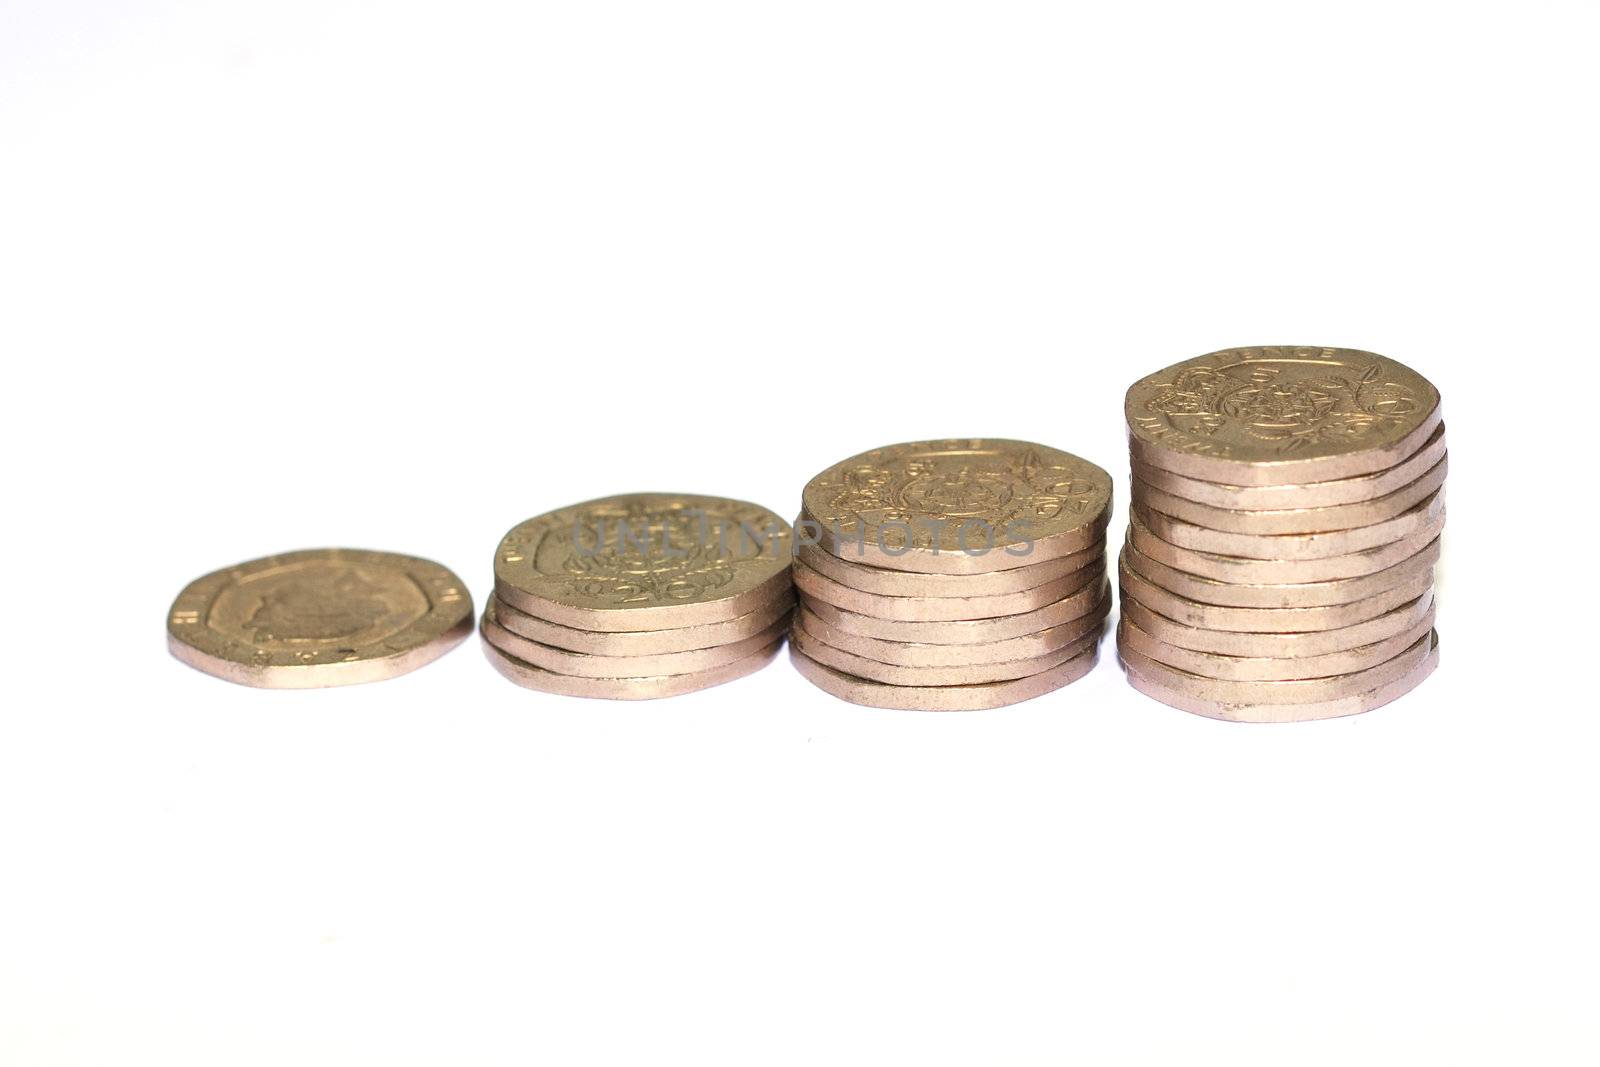 twenty pence coins by pauws99